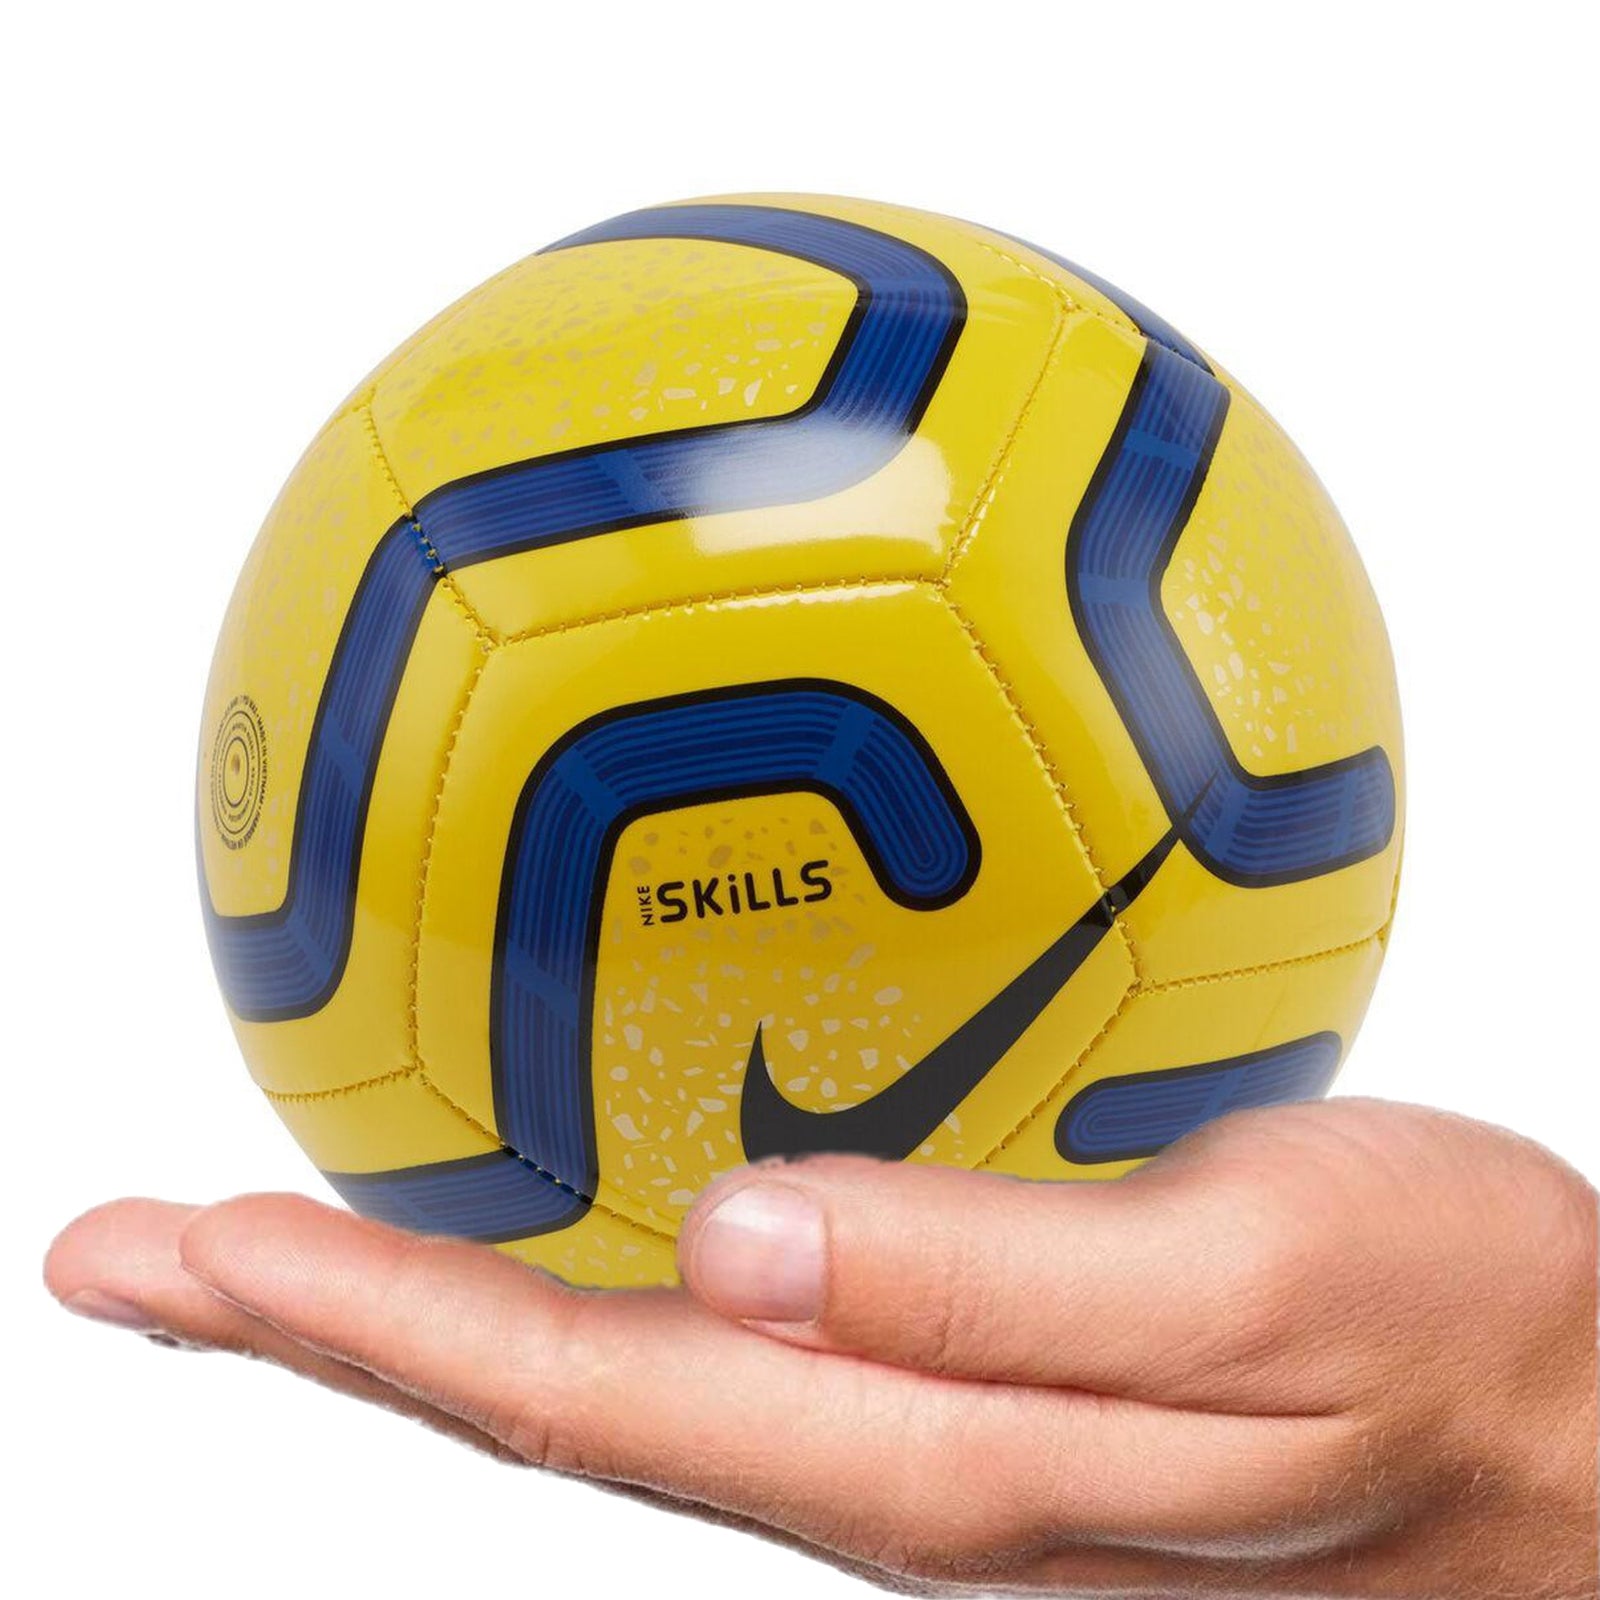 nike premier league mini soccer ball